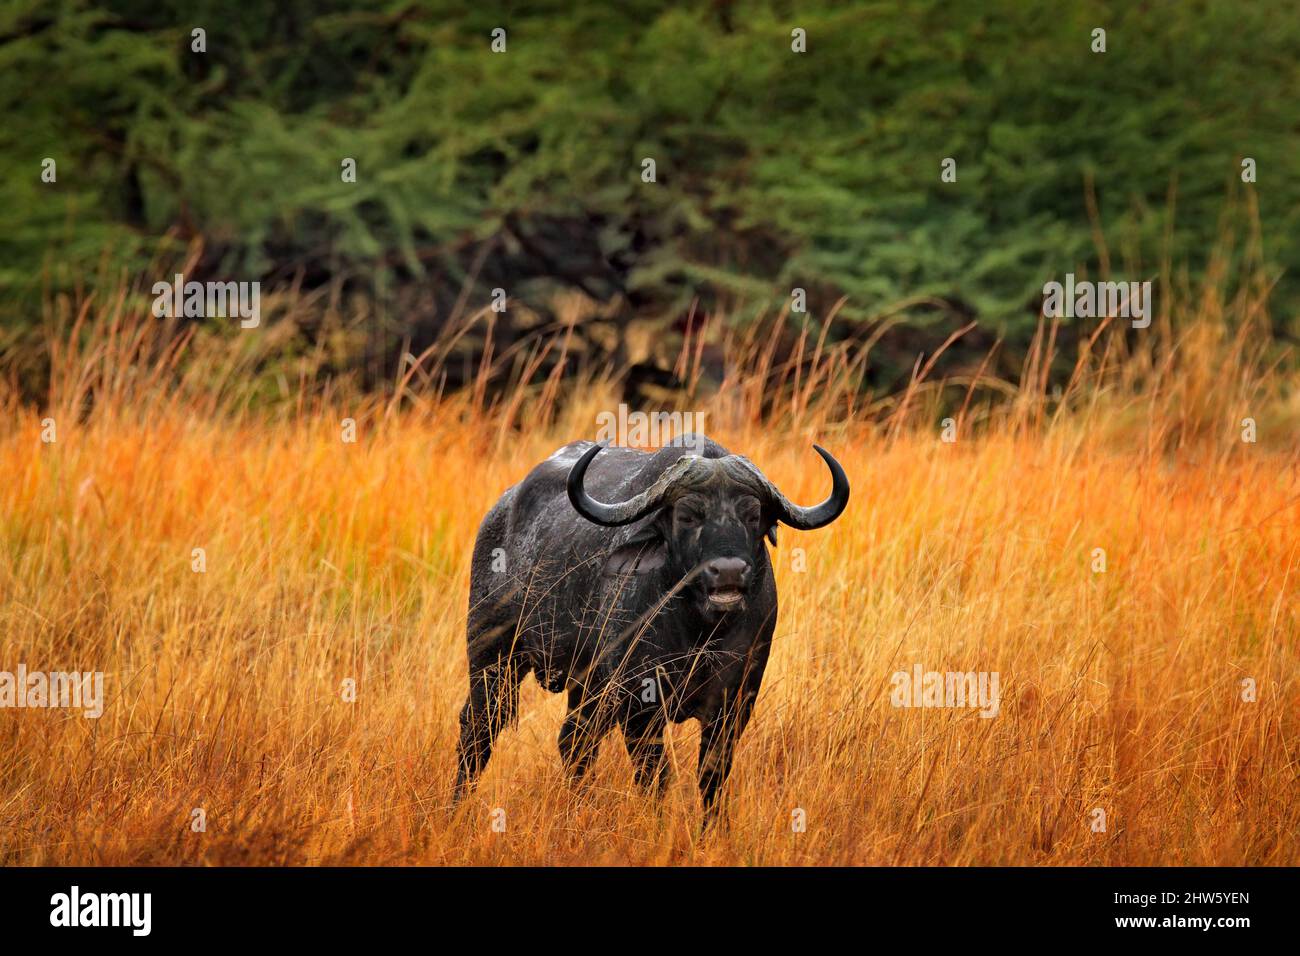 African Buffalo, Cyncerus cafer, standing savannah with yellow grass, Moremi, Okavango delta, Botswana. Wildlife scene from Africa nature. Big animal Stock Photo